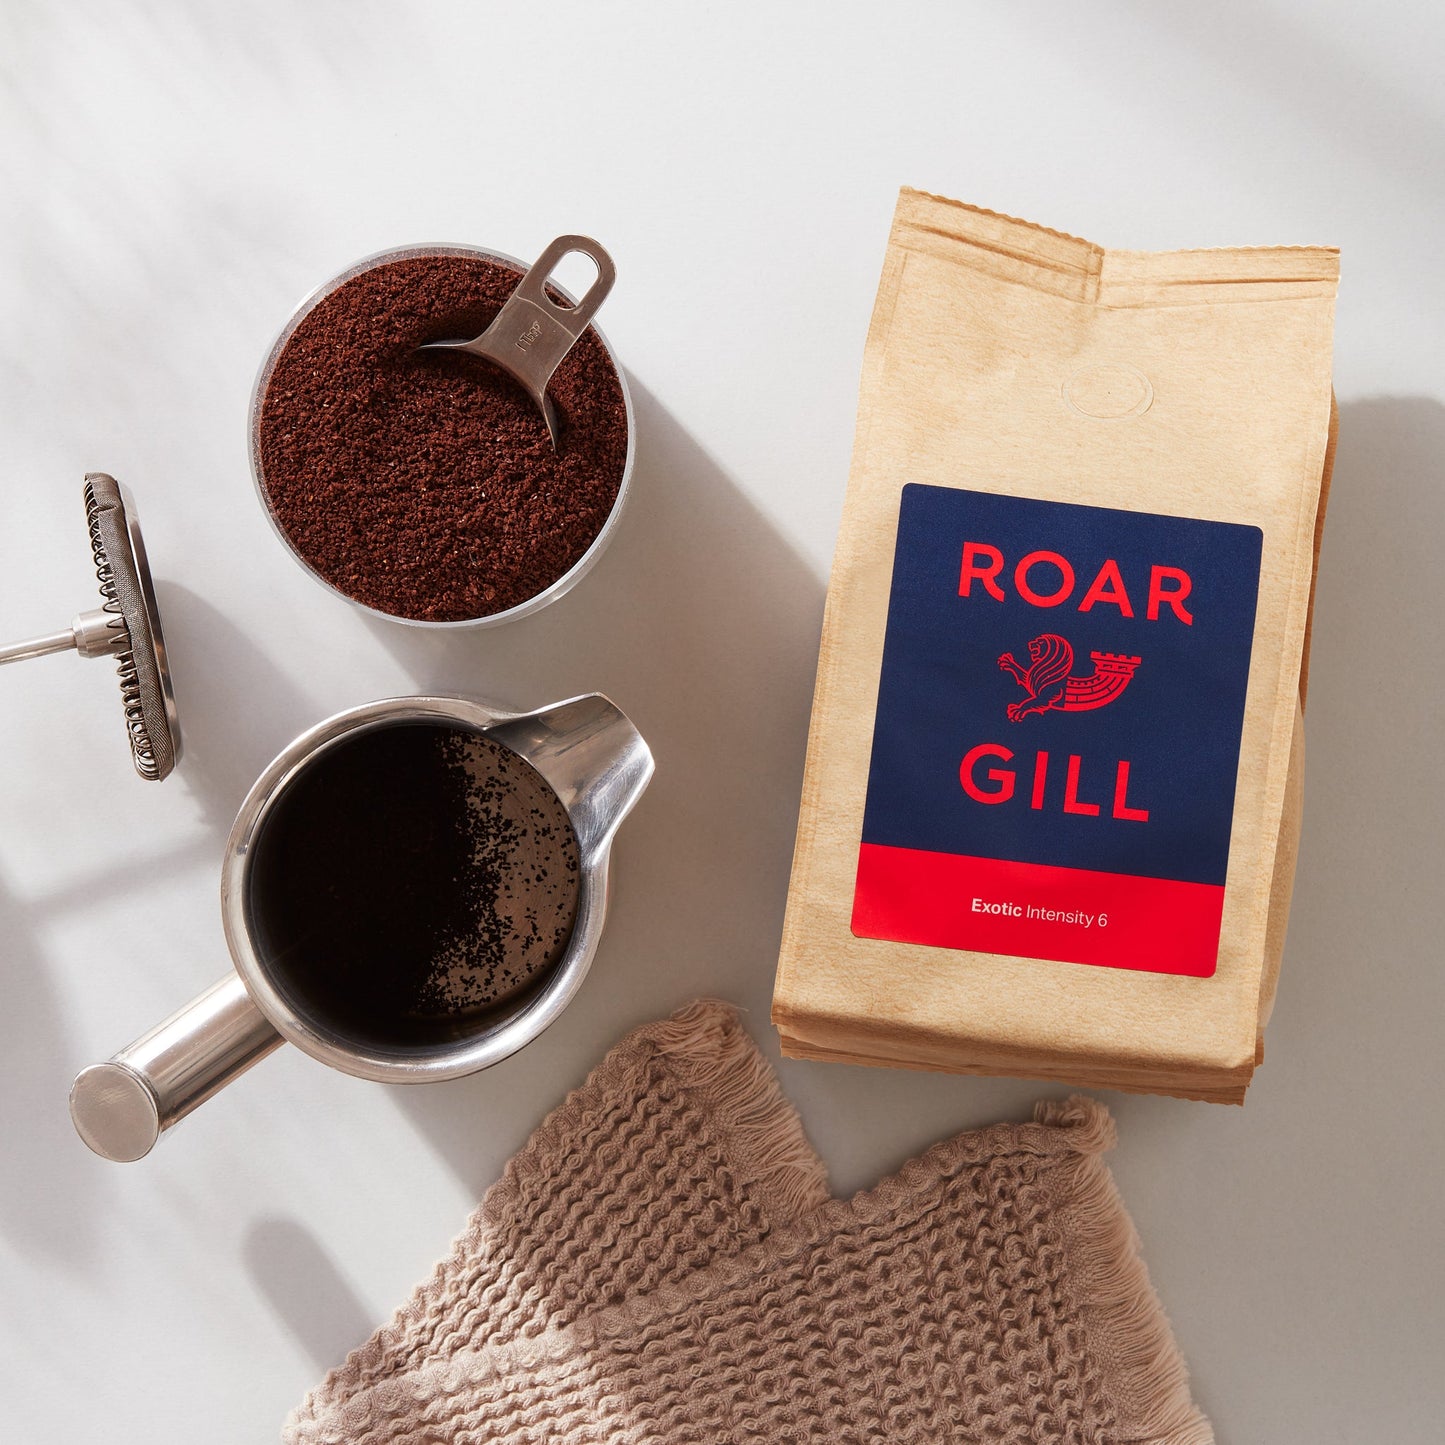 Roar Gill Exotic Medium Ground Coffee from Peru